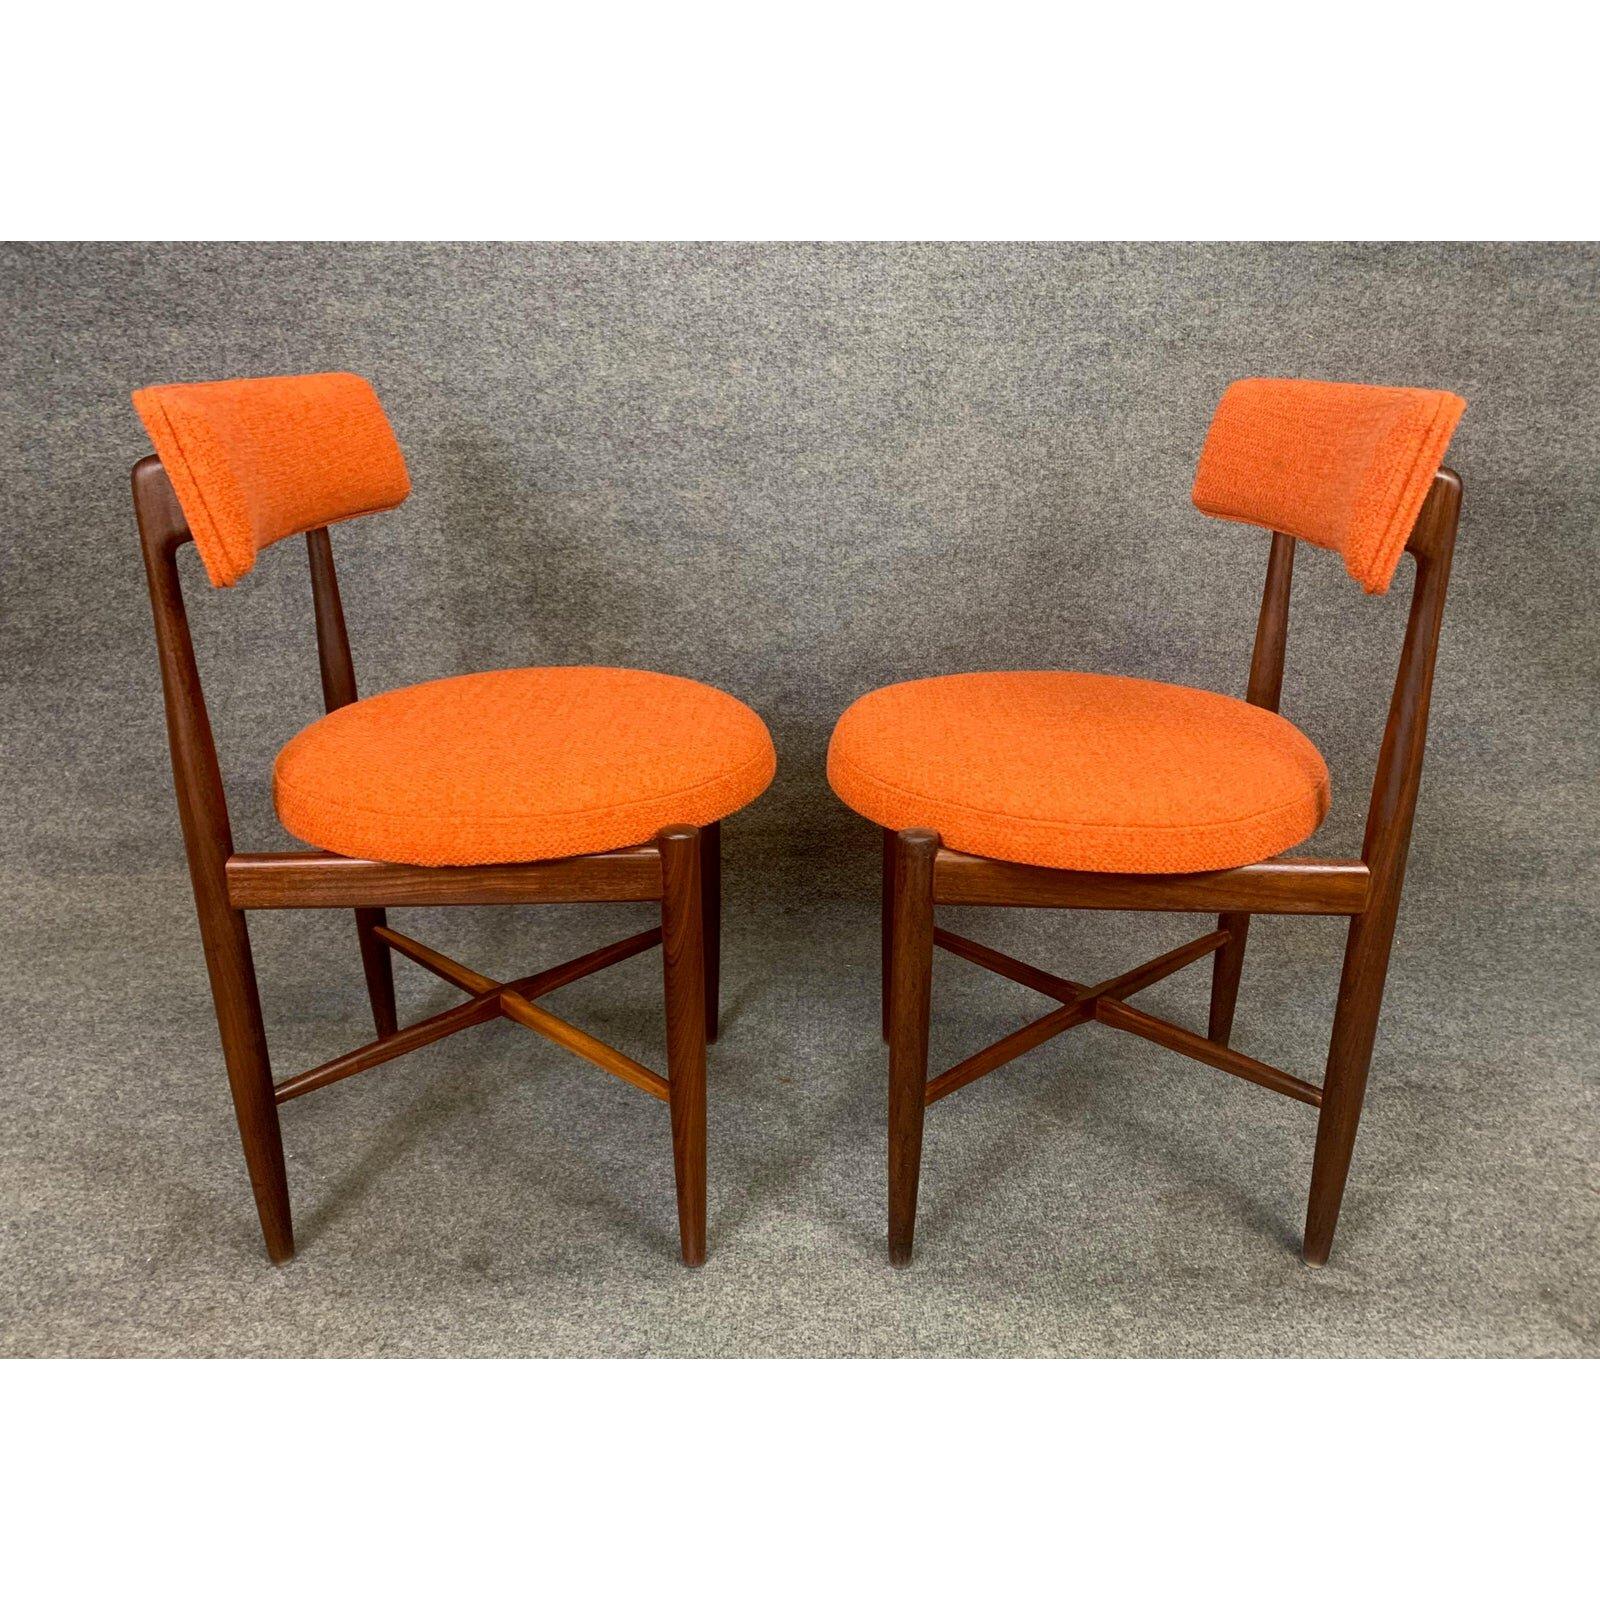 Mid-20th Century Pair of Vintage British Mid Century Modern Teak Accent Chairs by G Plan